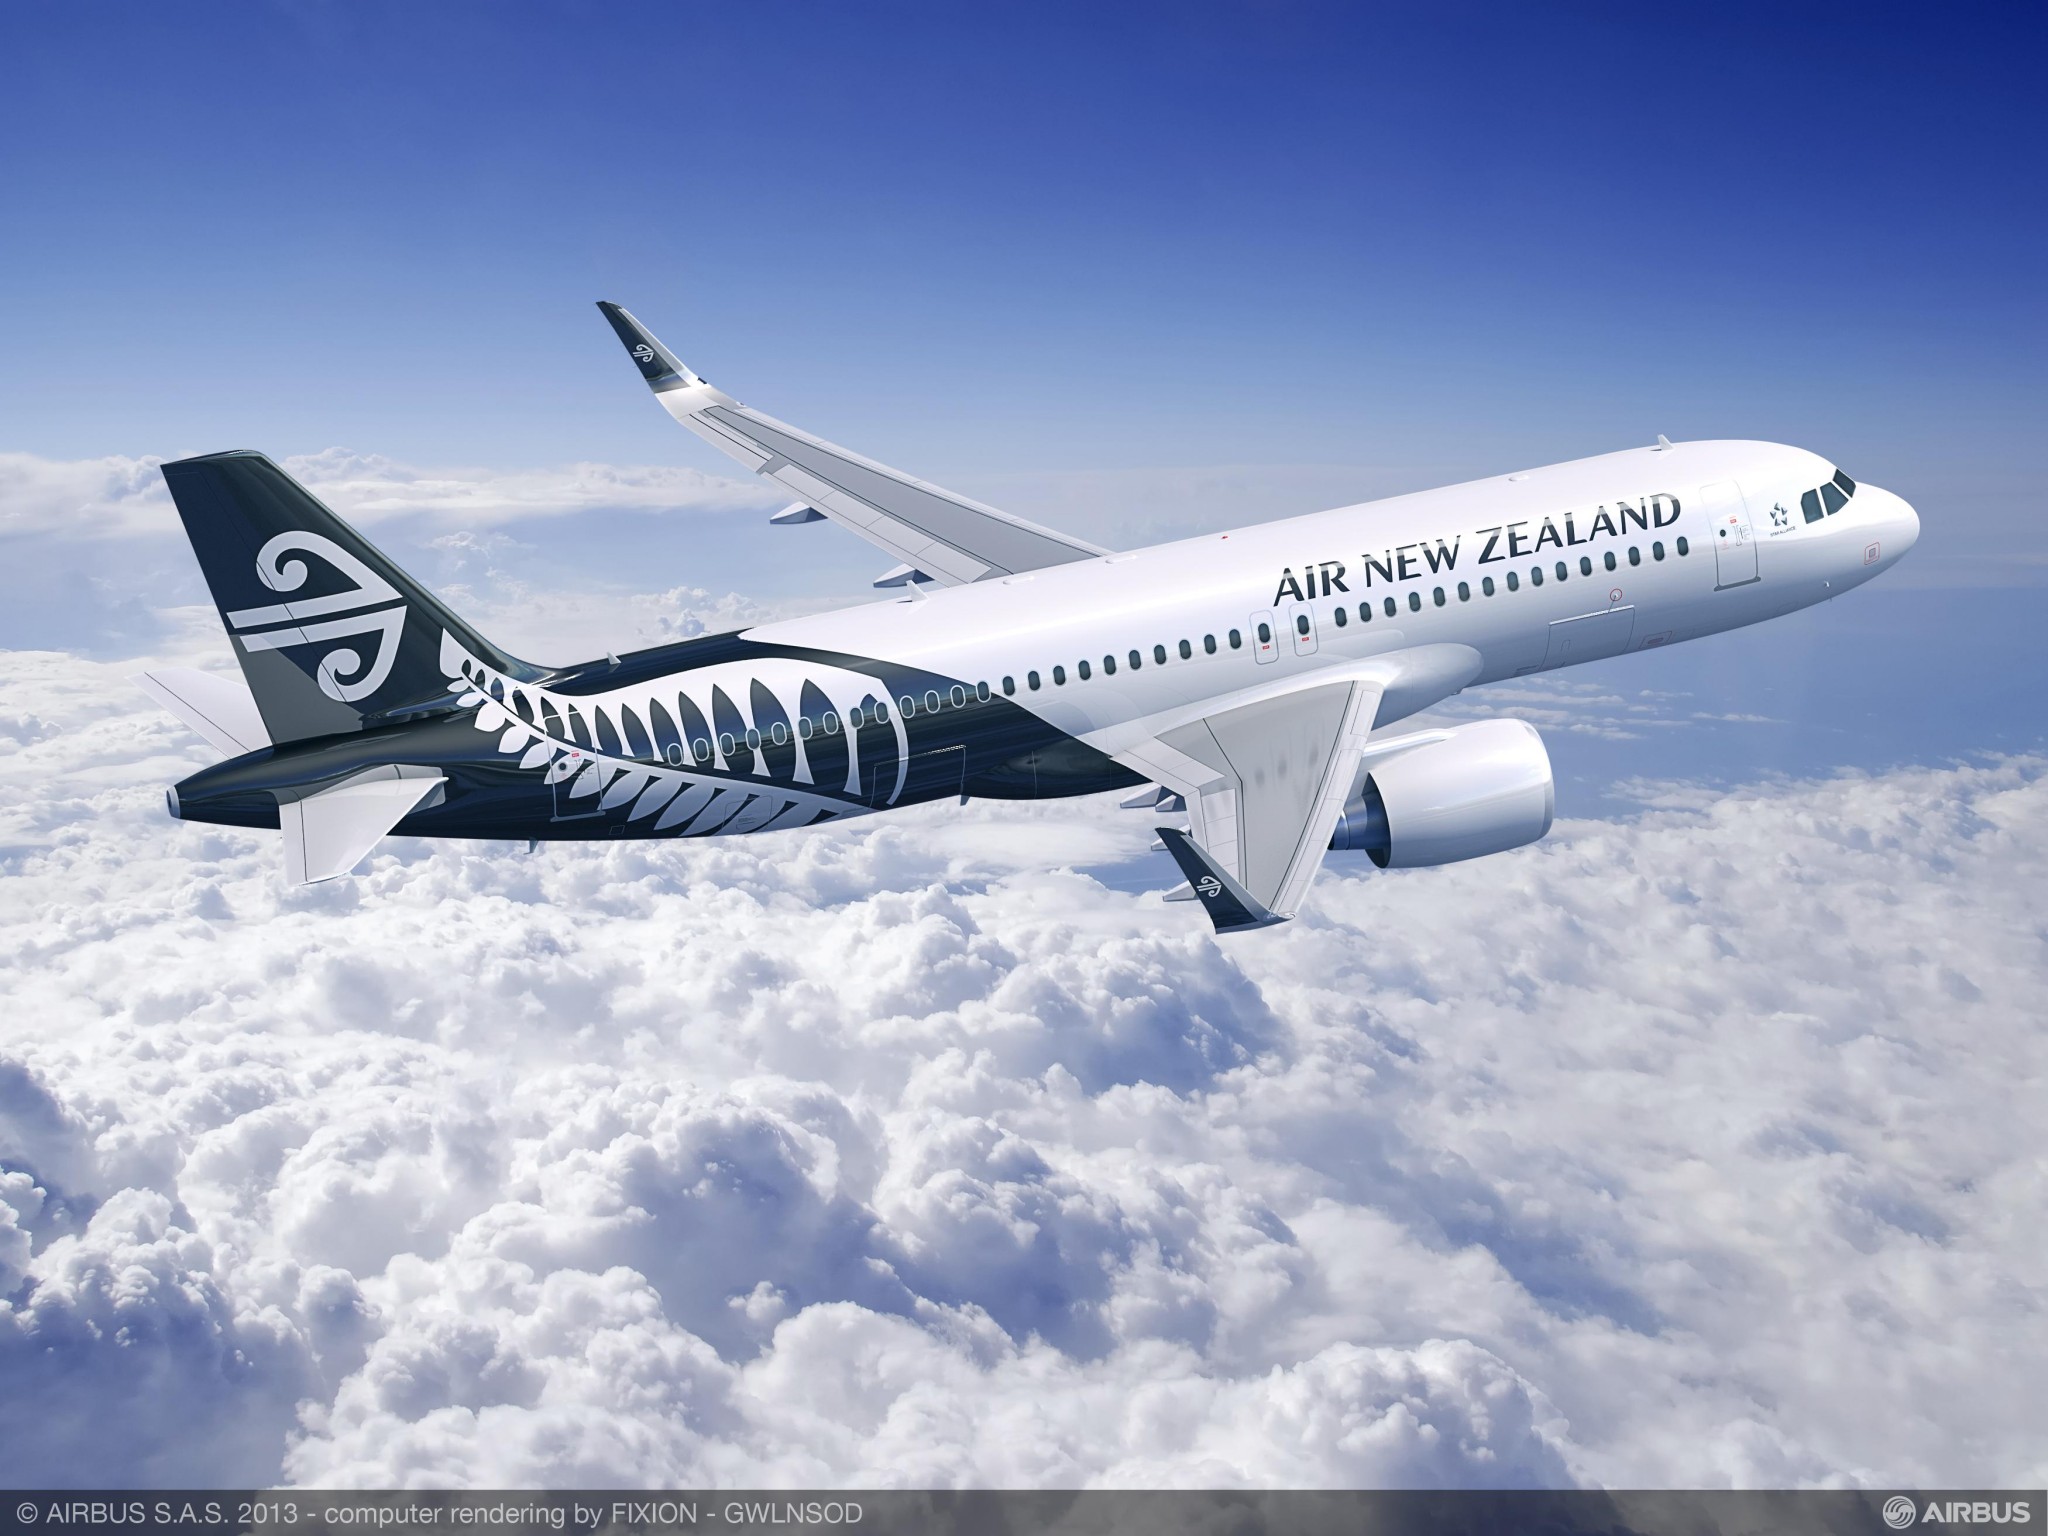 Air New Zealand makes $338 million impairment on its Boeing 777-200ER fleet